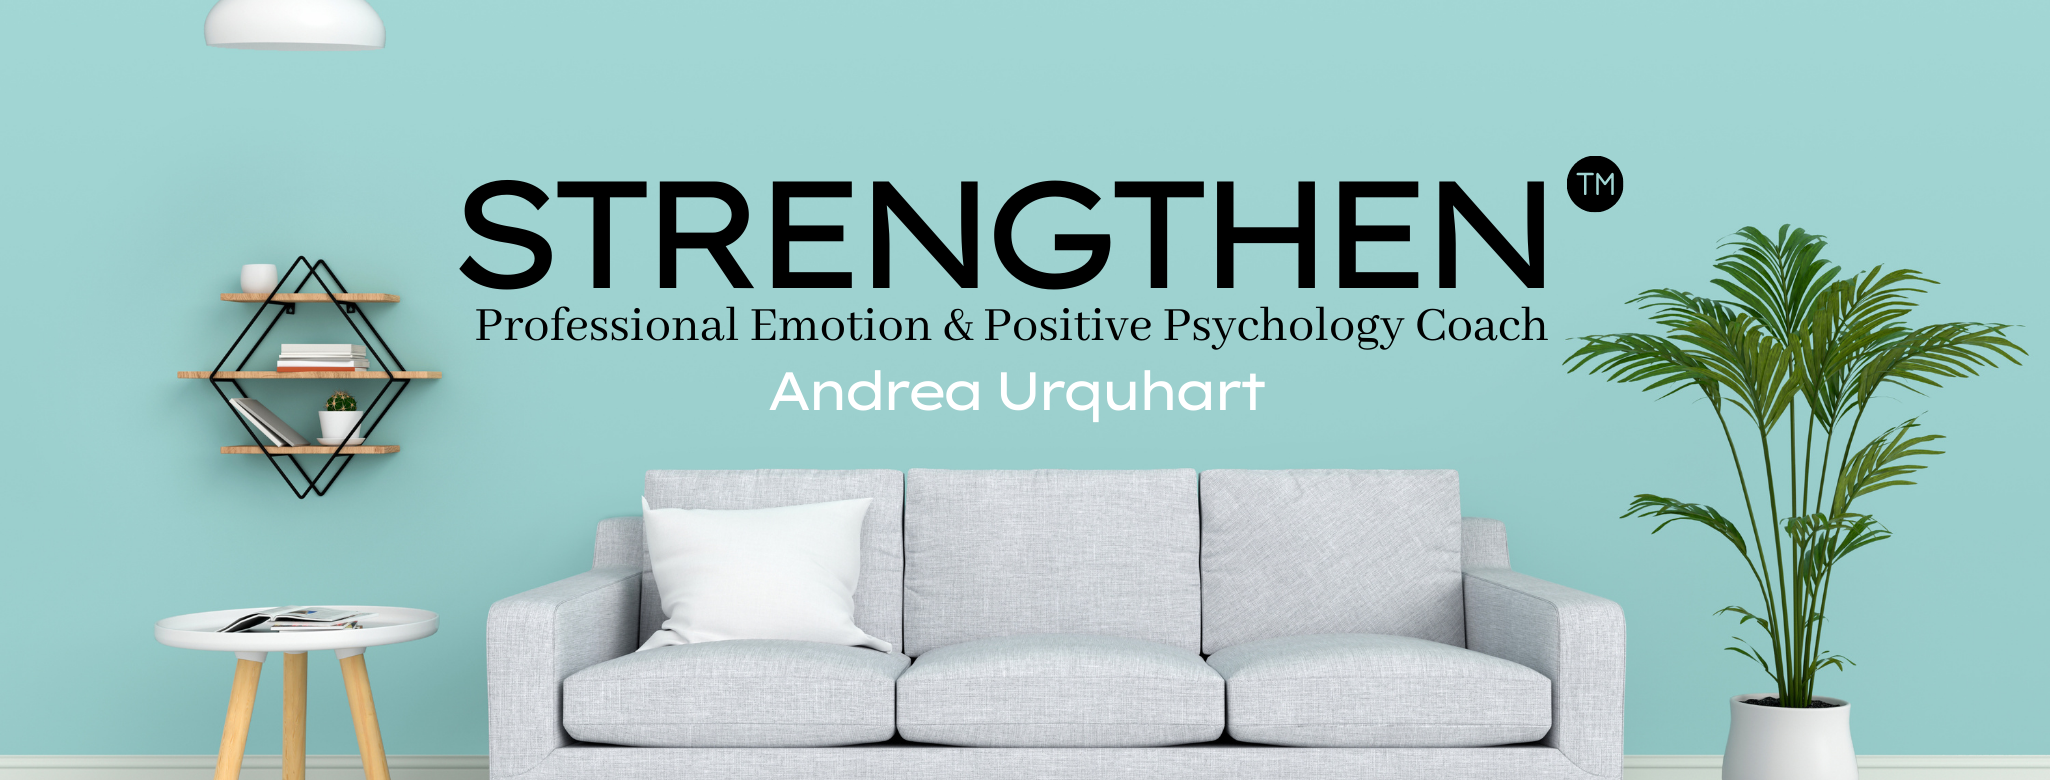 Banner for Strengthen Ltd Emotion and Positive Psychology Coach Andrea Urquhart